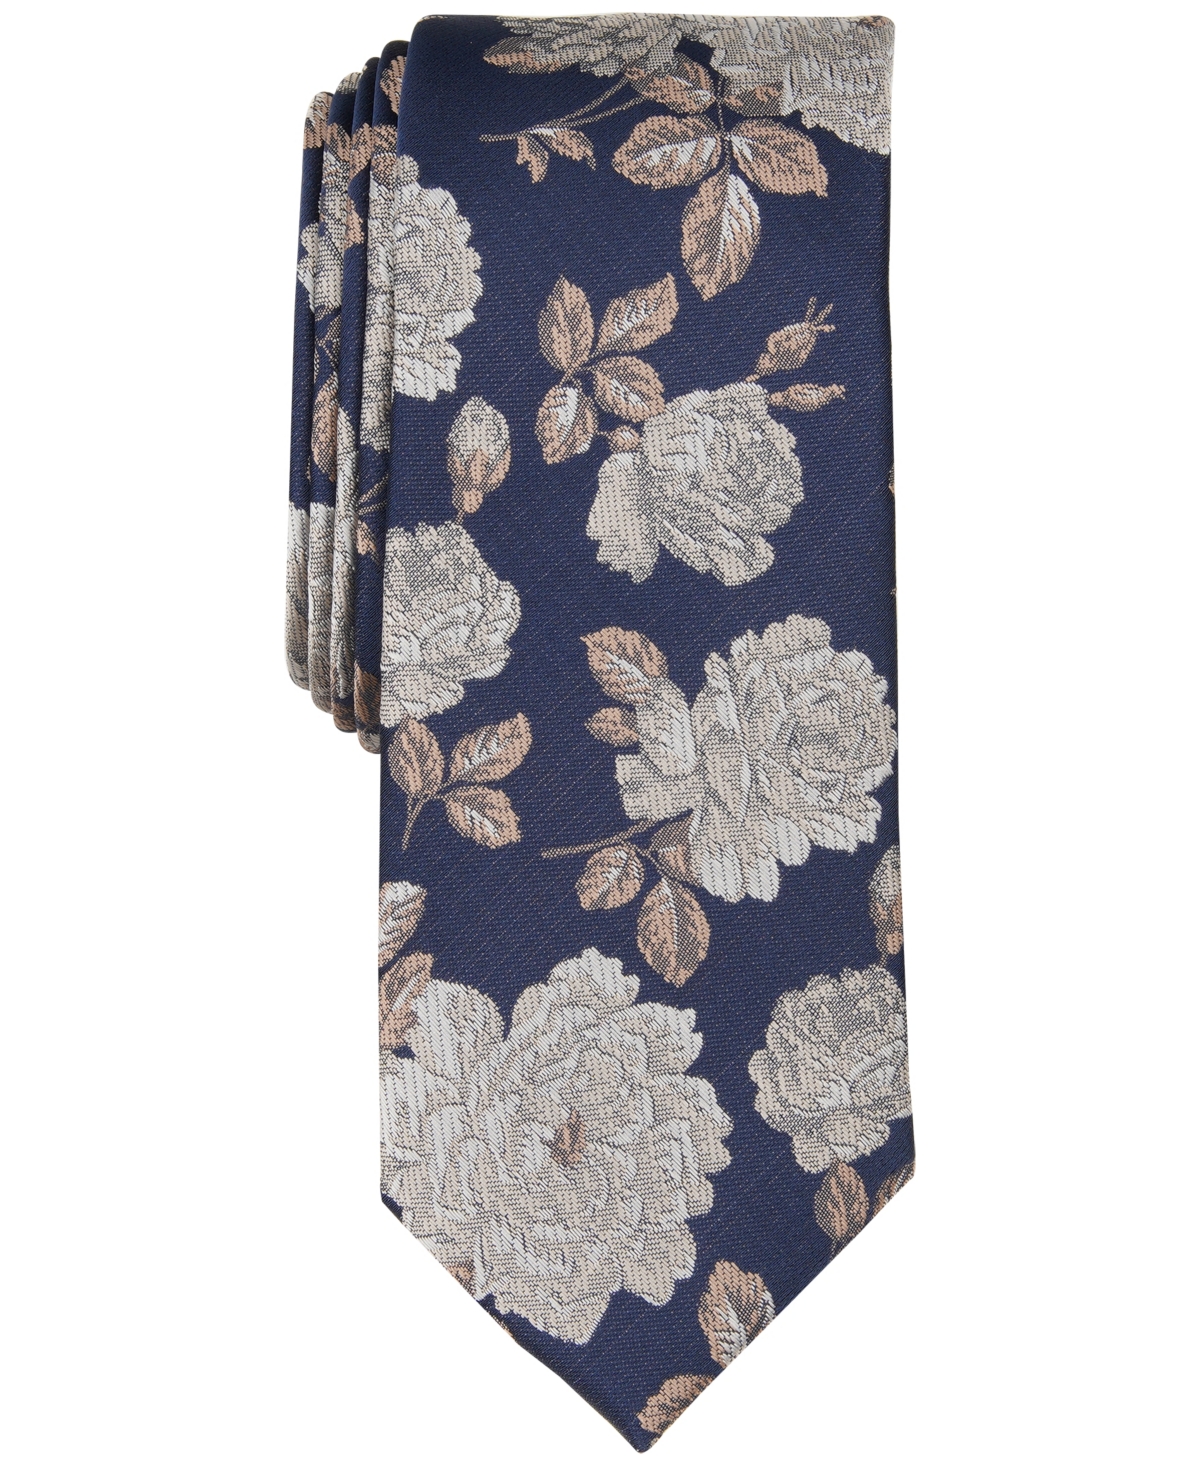 Men's Ellery Floral Tie, Created for Macy's - Tan